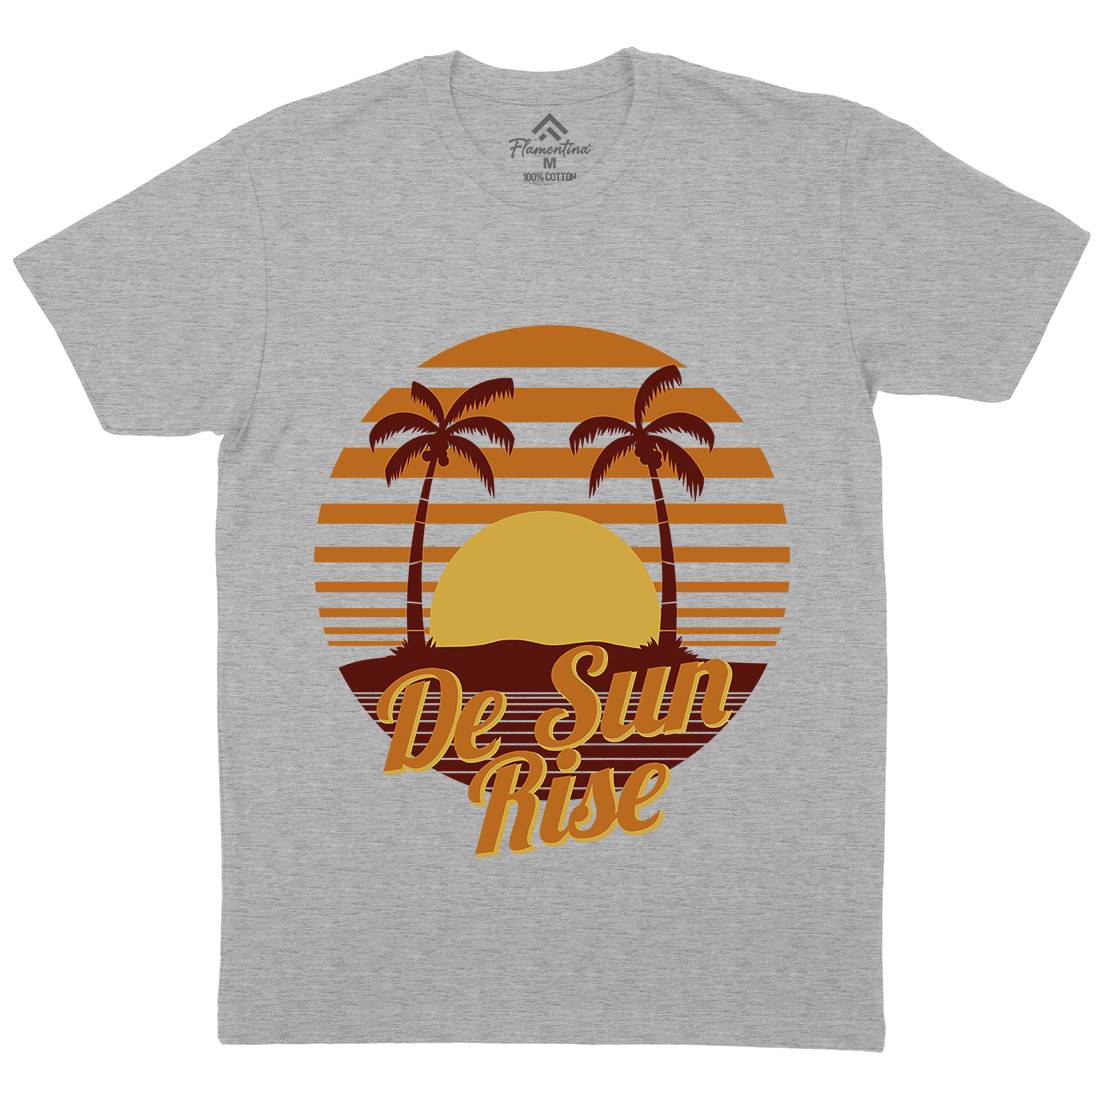 Sun Rise Mens Crew Neck T-Shirt Holiday D752